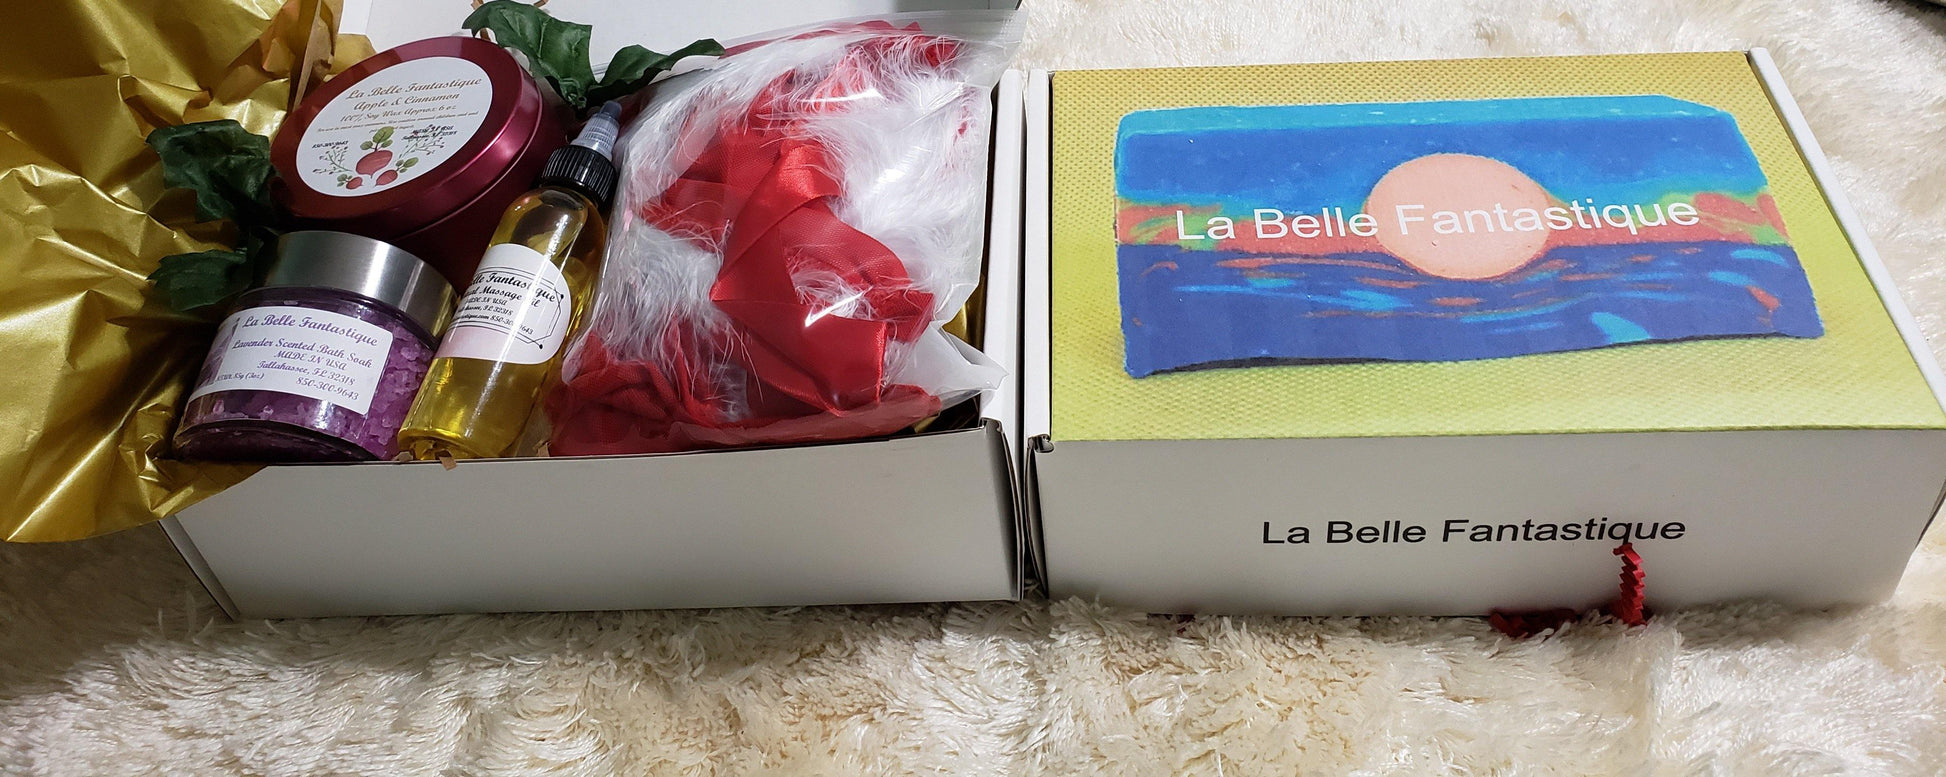 La Belle Fantastique Lingerie set | Lingerie set Red/White Santa Clause  | Erotic lingerie | Sexy underwear | Honeymoon lingerie | Gift Set | For Her - La Belle Fantastique 